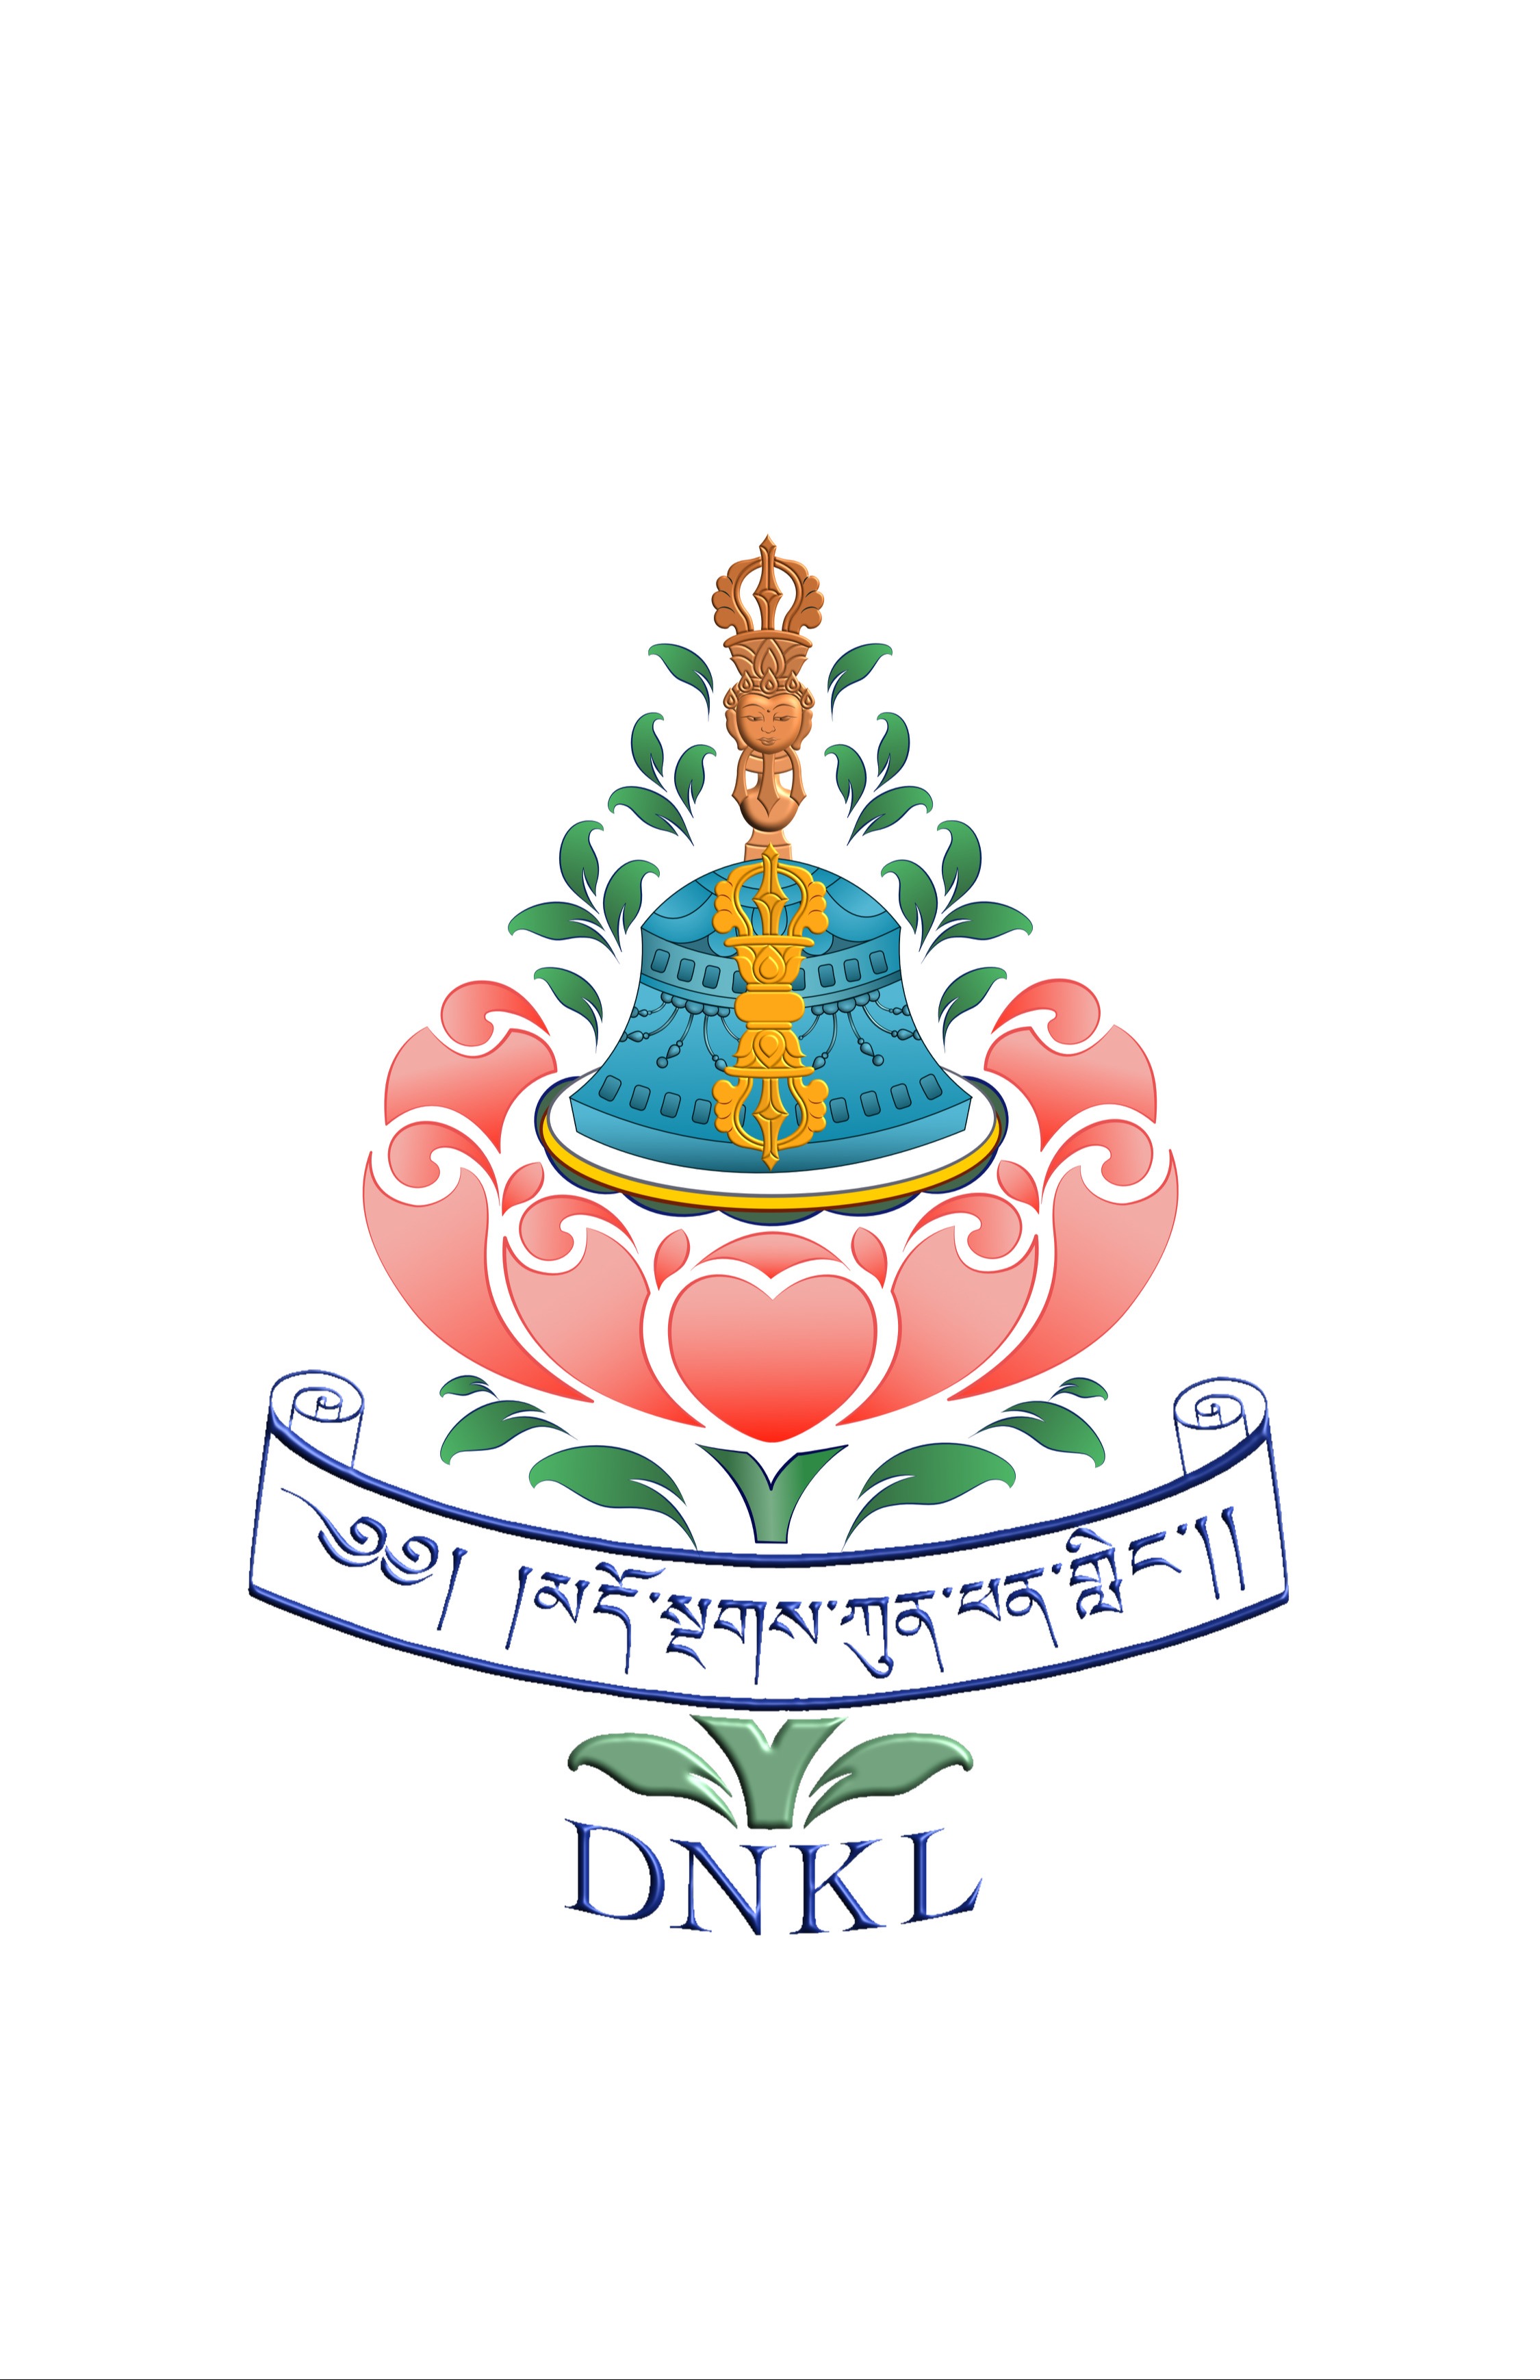 DNKL Tibetan Center for Universal Peace logo